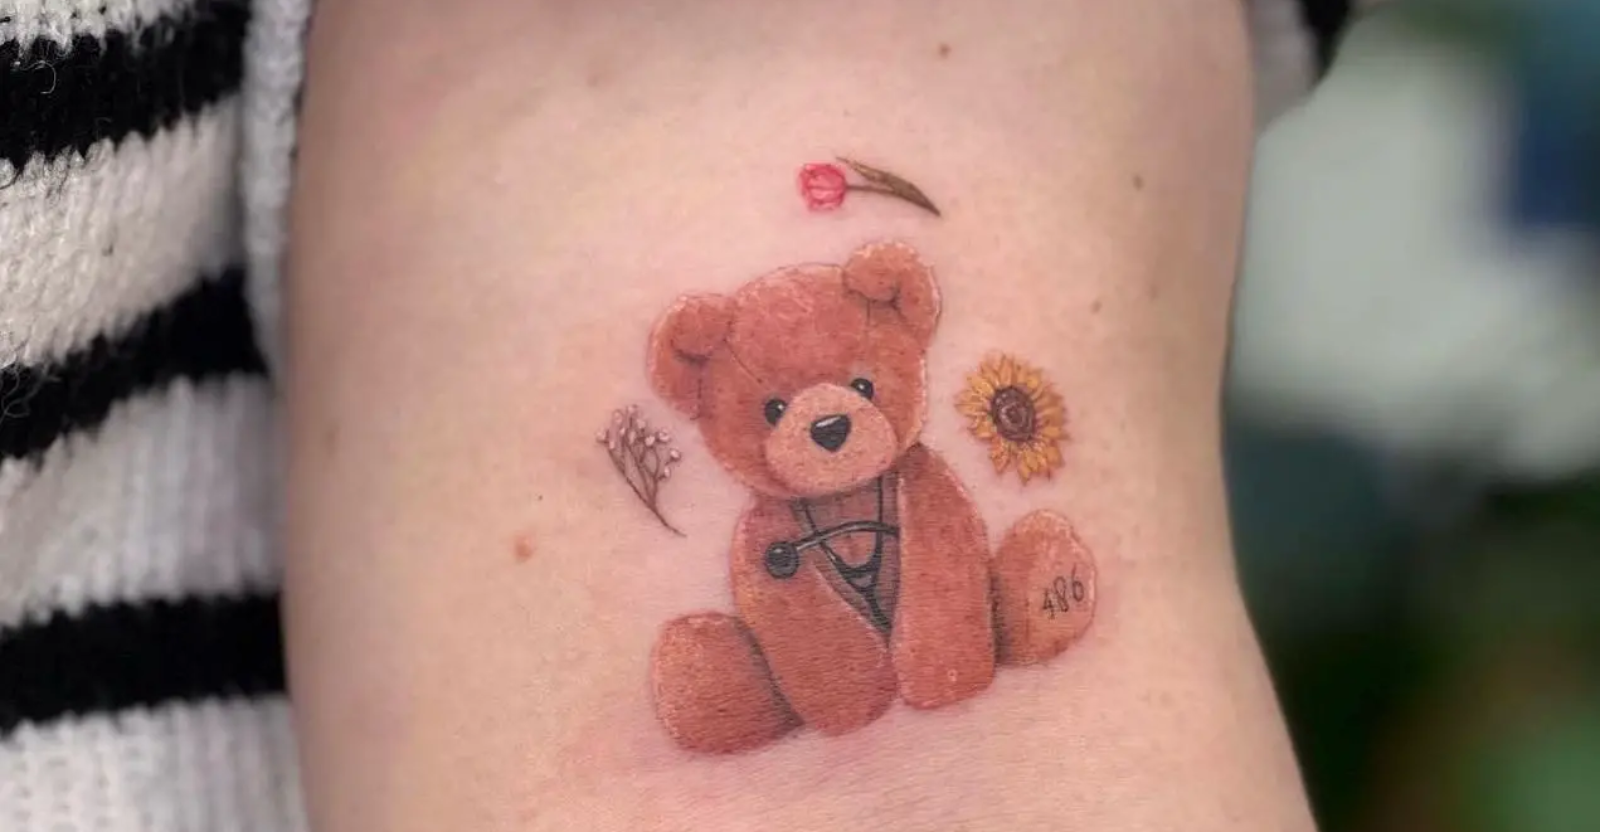 Fine line little teddy bear tattoo located on the inner